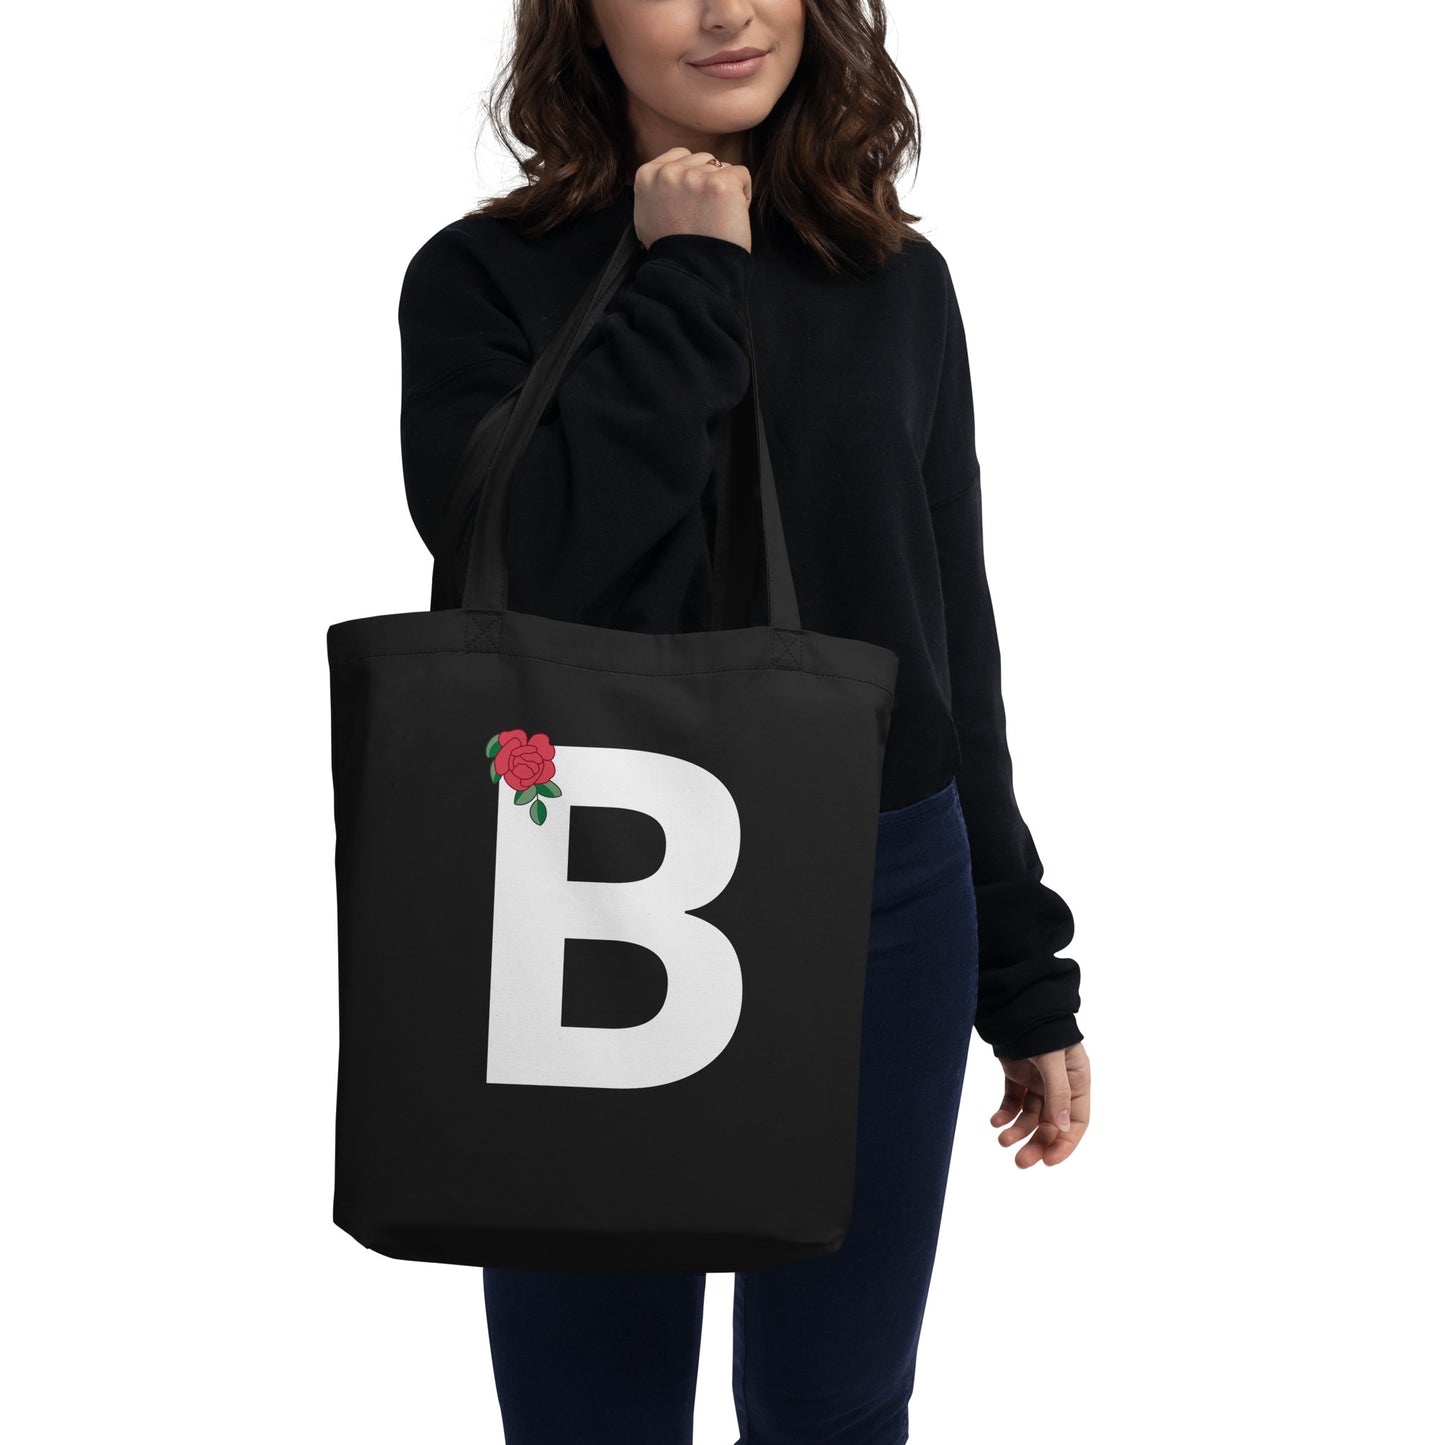 Letter "B" Eco Tote Bag